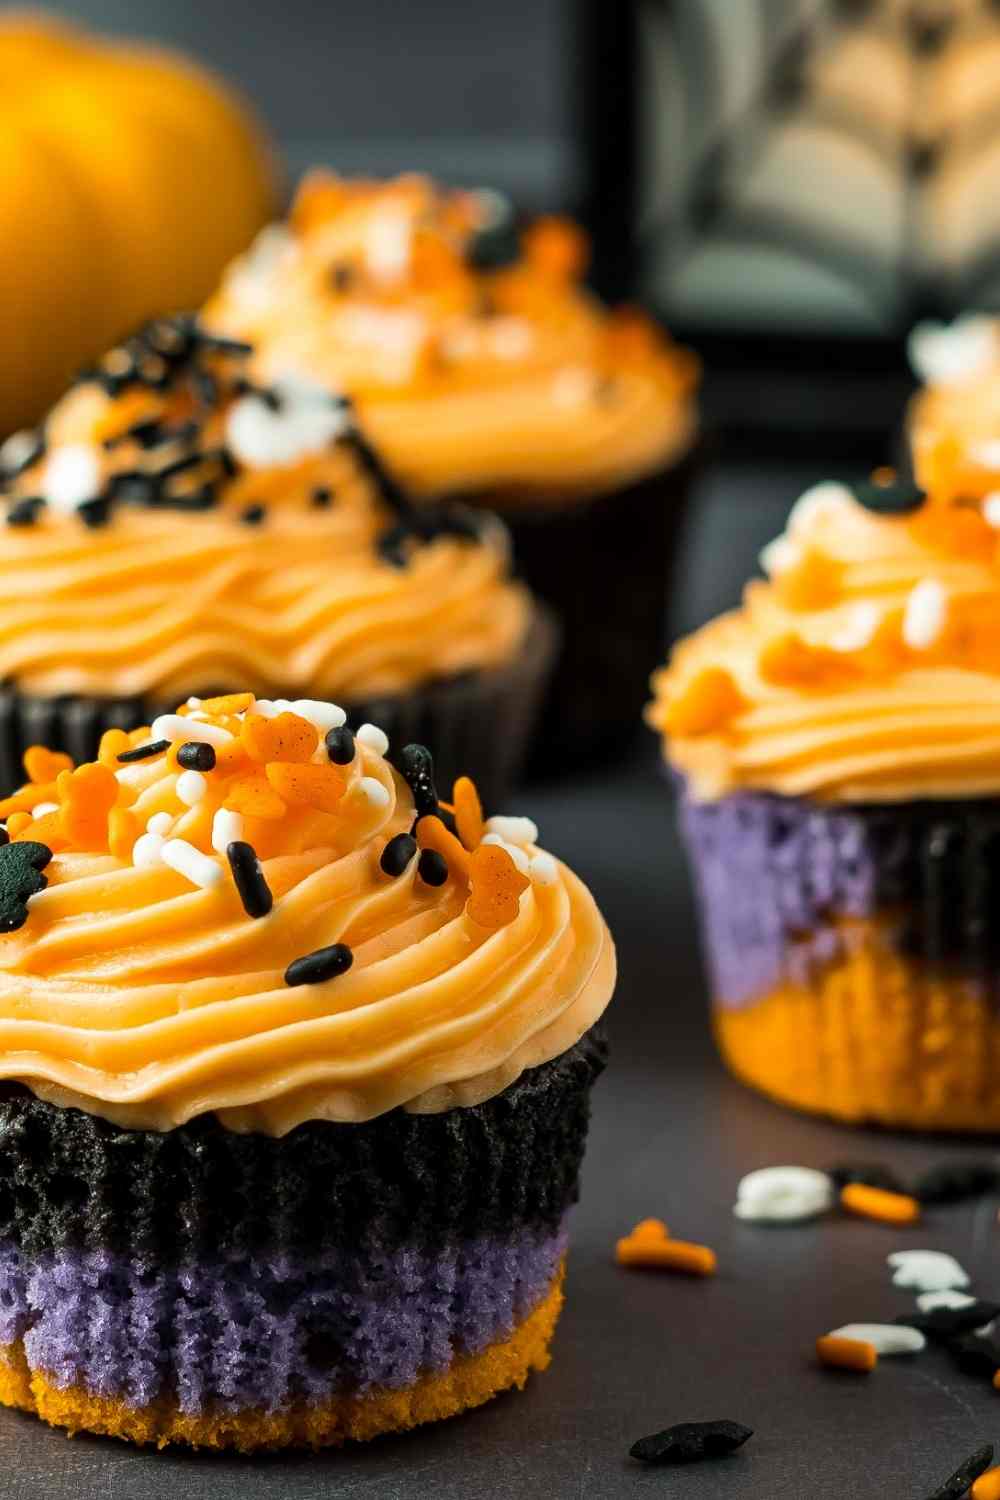 Lady grey cupcake with orange frosting